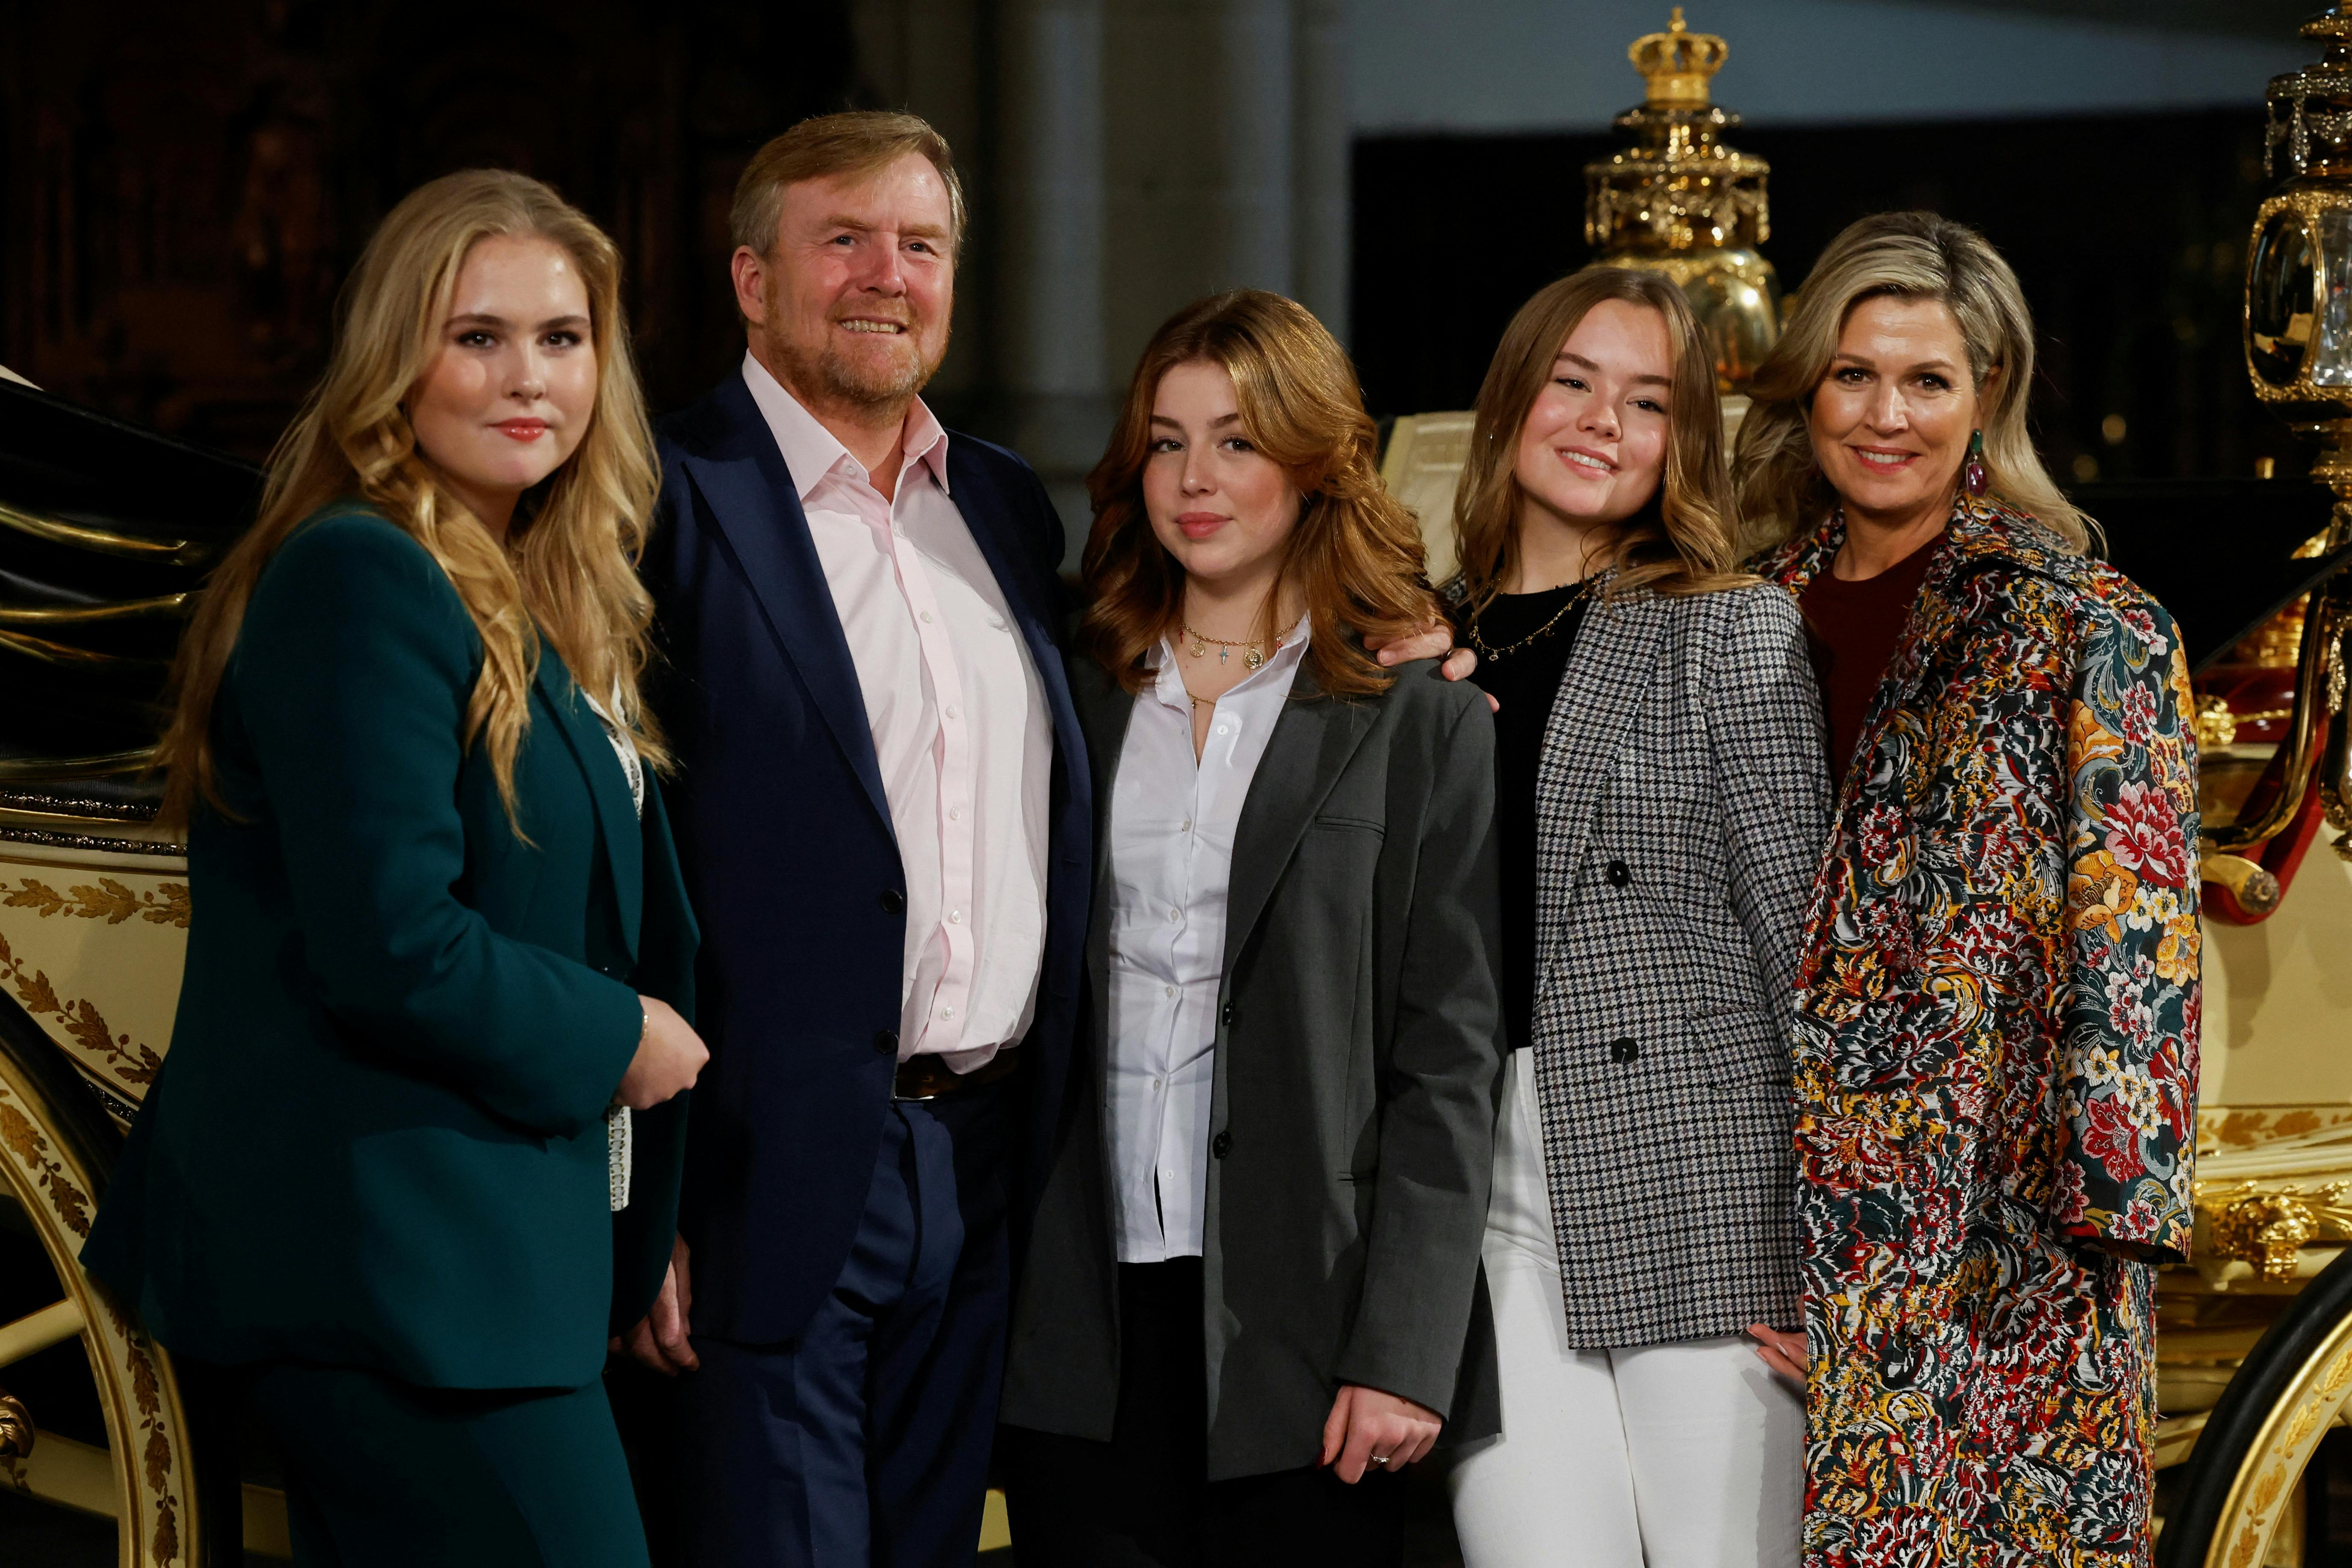 Fra venstre: Prinsesse Amalia, kong Willem-Alexander, prinsesse Alexia, prinsesse Ariane og dronning Maxima.&nbsp;
